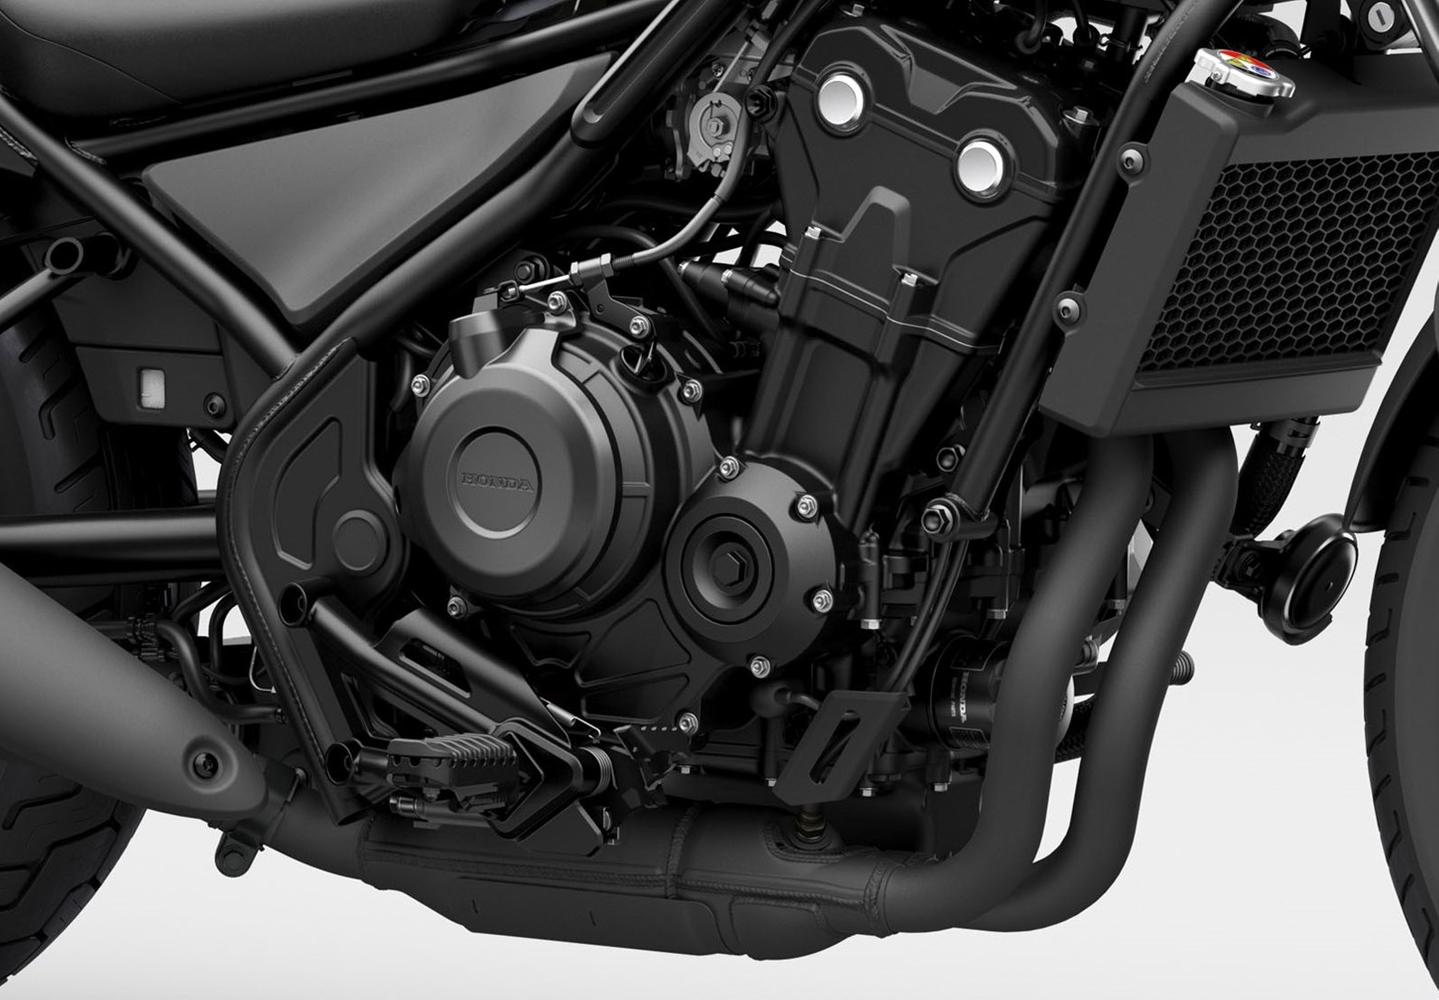 Honda CMX 500 S - Sunstate Motorcycles